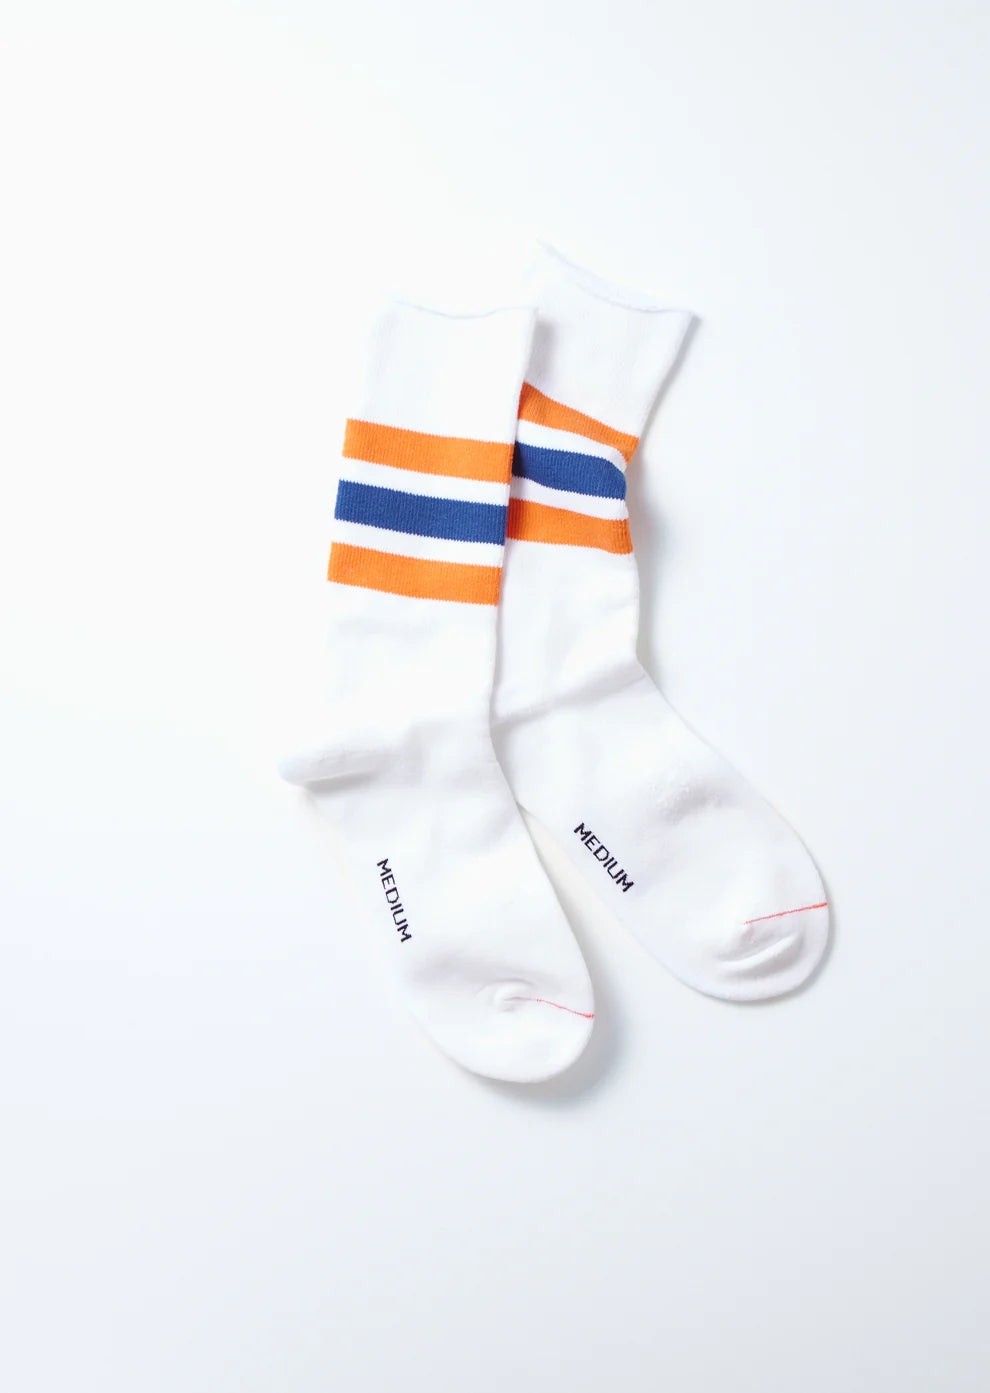 Fine Pile Stripe Crew Socks  RoToTo White/Orange/Blue L 